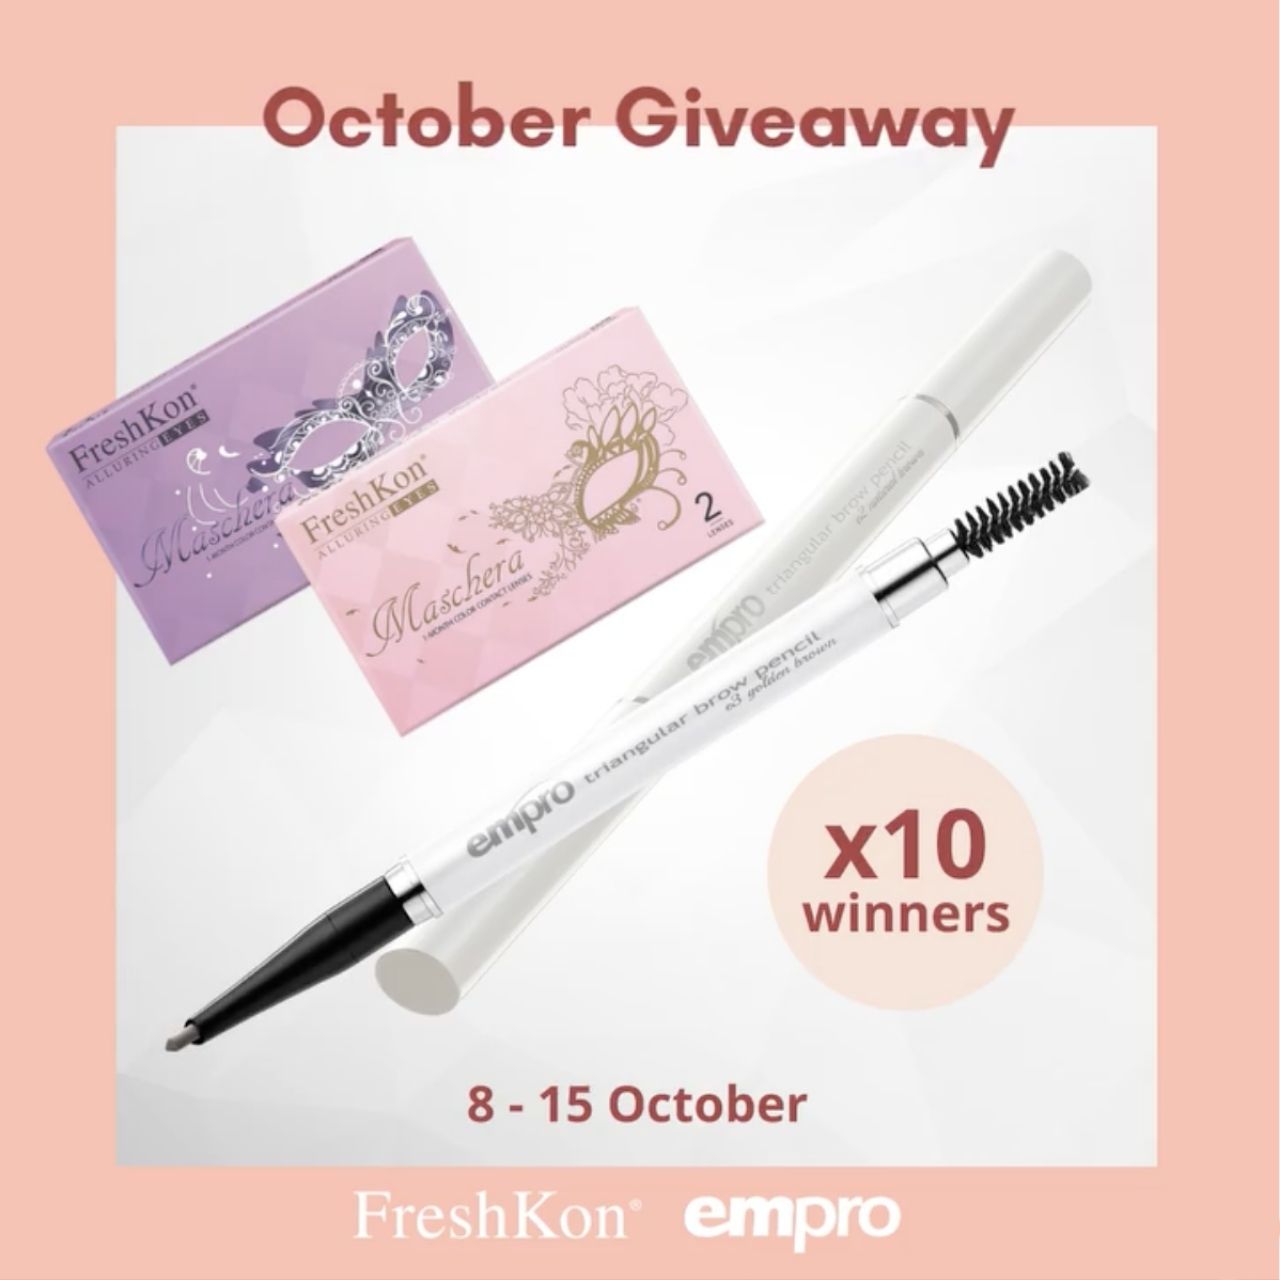 FreshKon Maschera & Empro Triangular Brow Pencil Giveaway